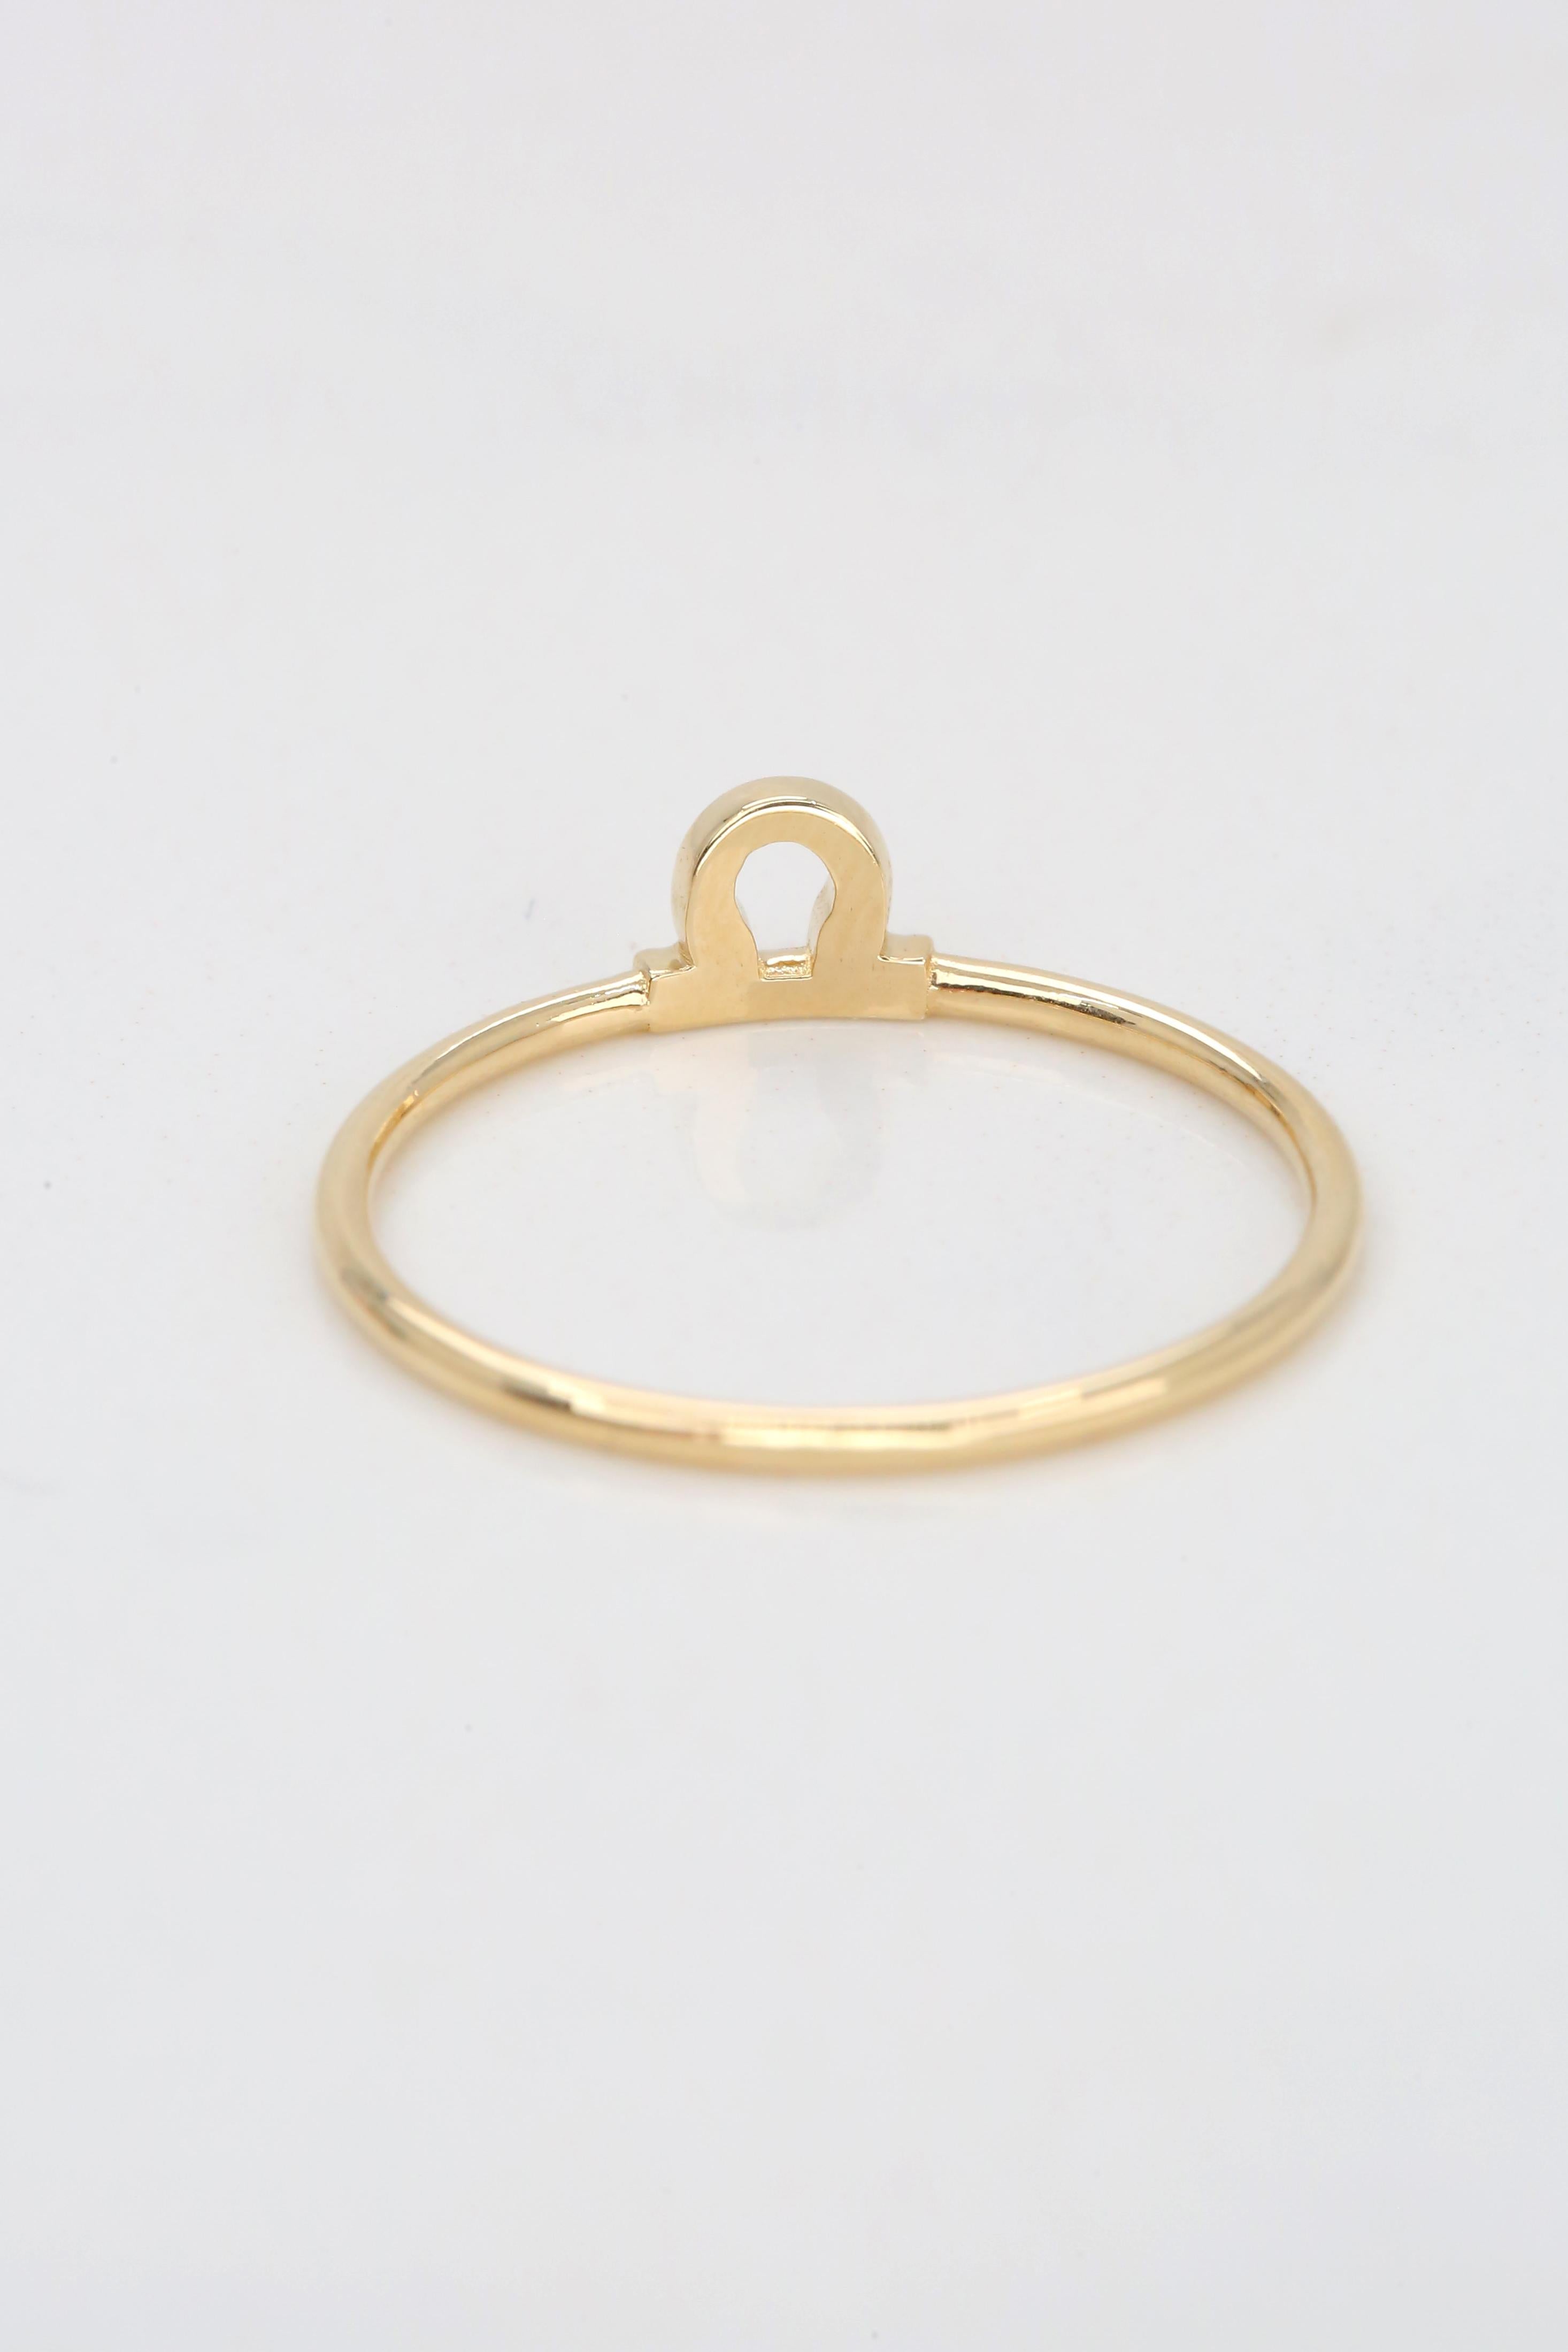 For Sale:  14k Gold Libra Ring, Libra Sign Gold Ring 5